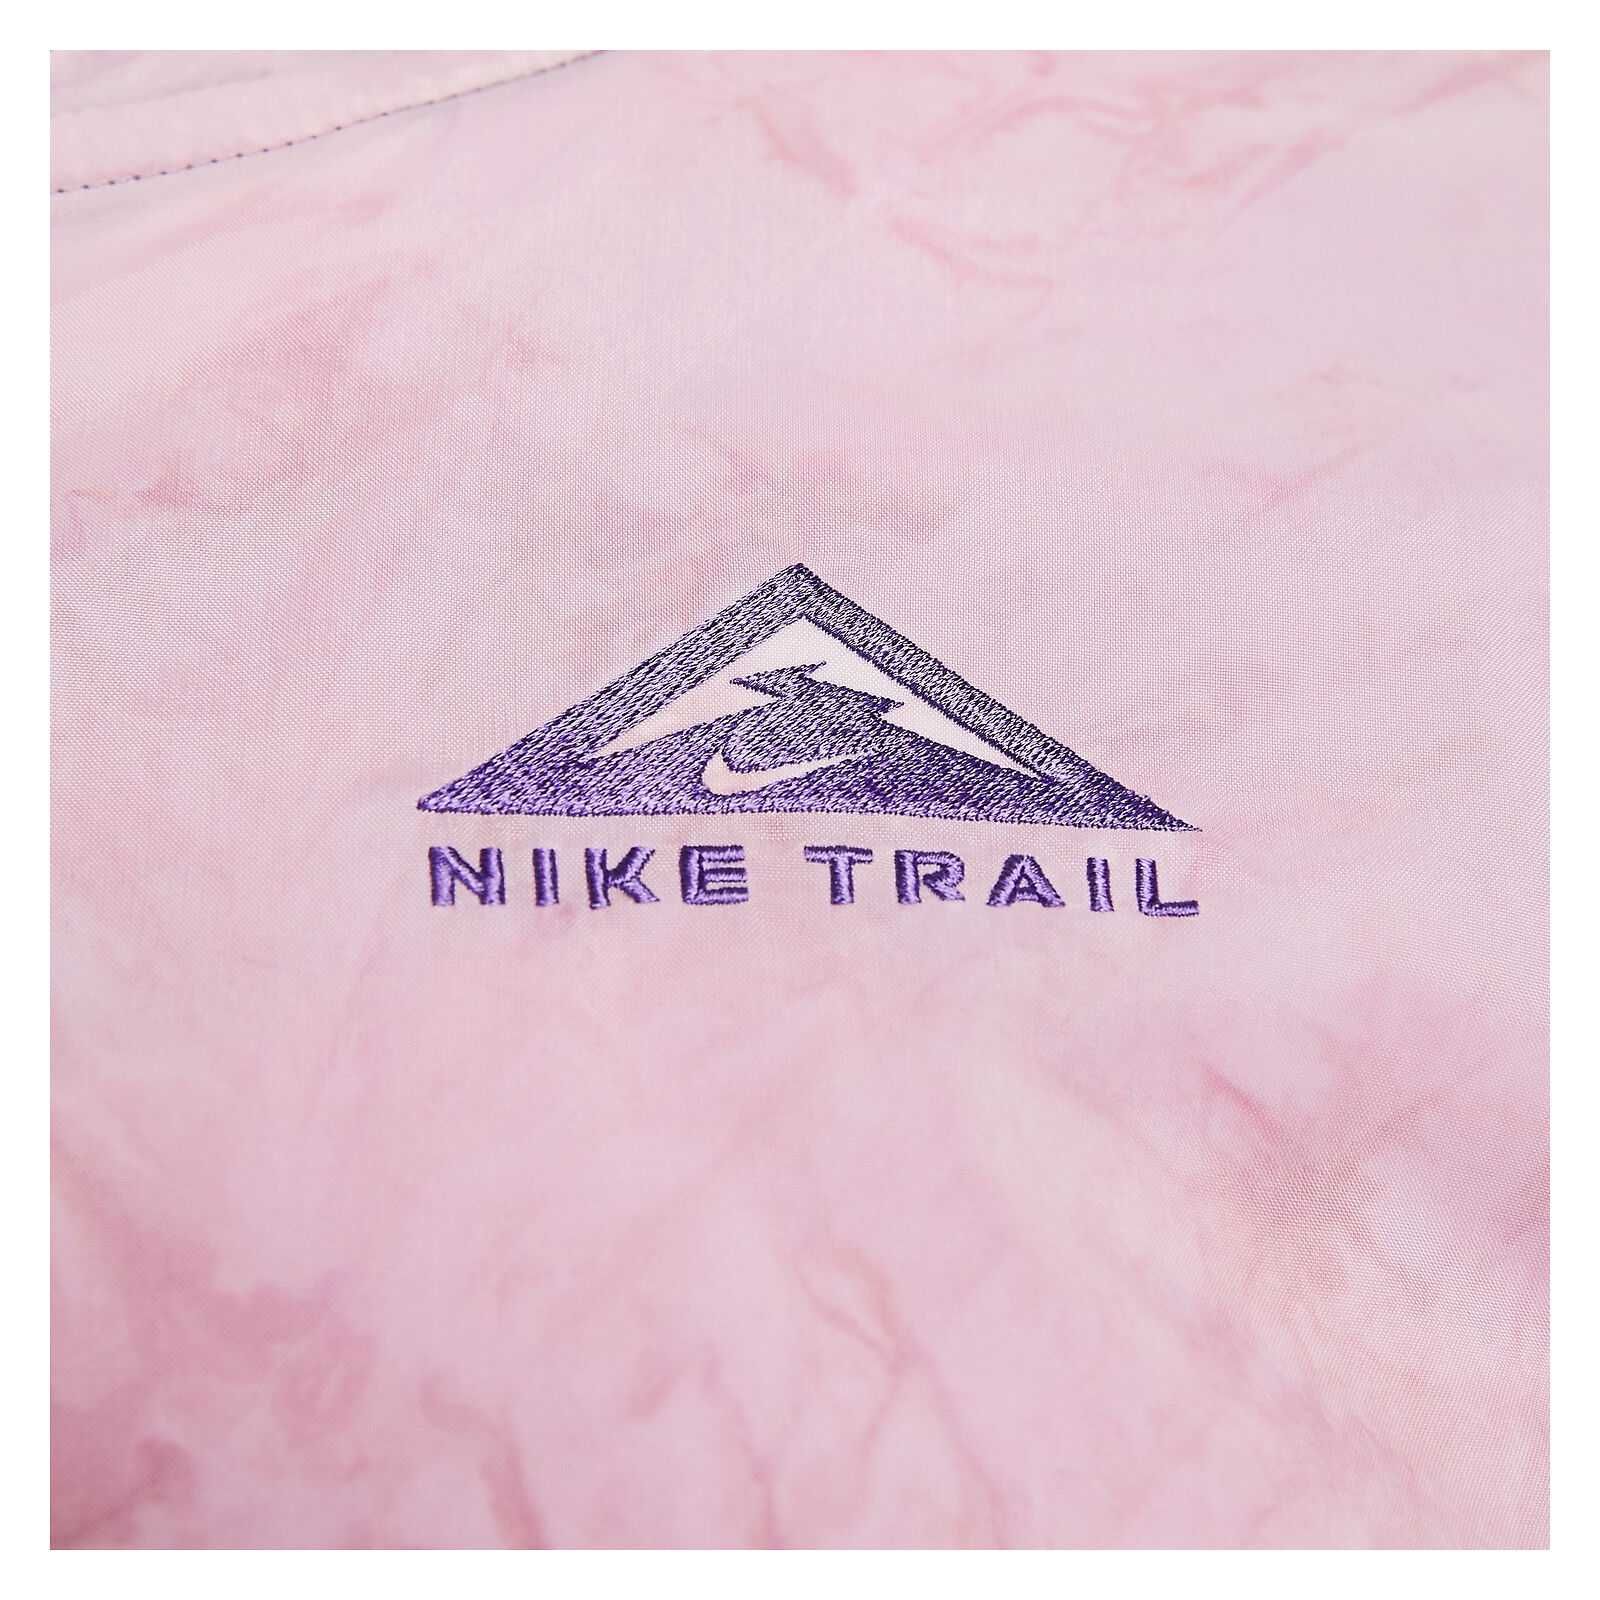 Ветровка женская Nike Repel Trail Running Jacket (DX1041-756)